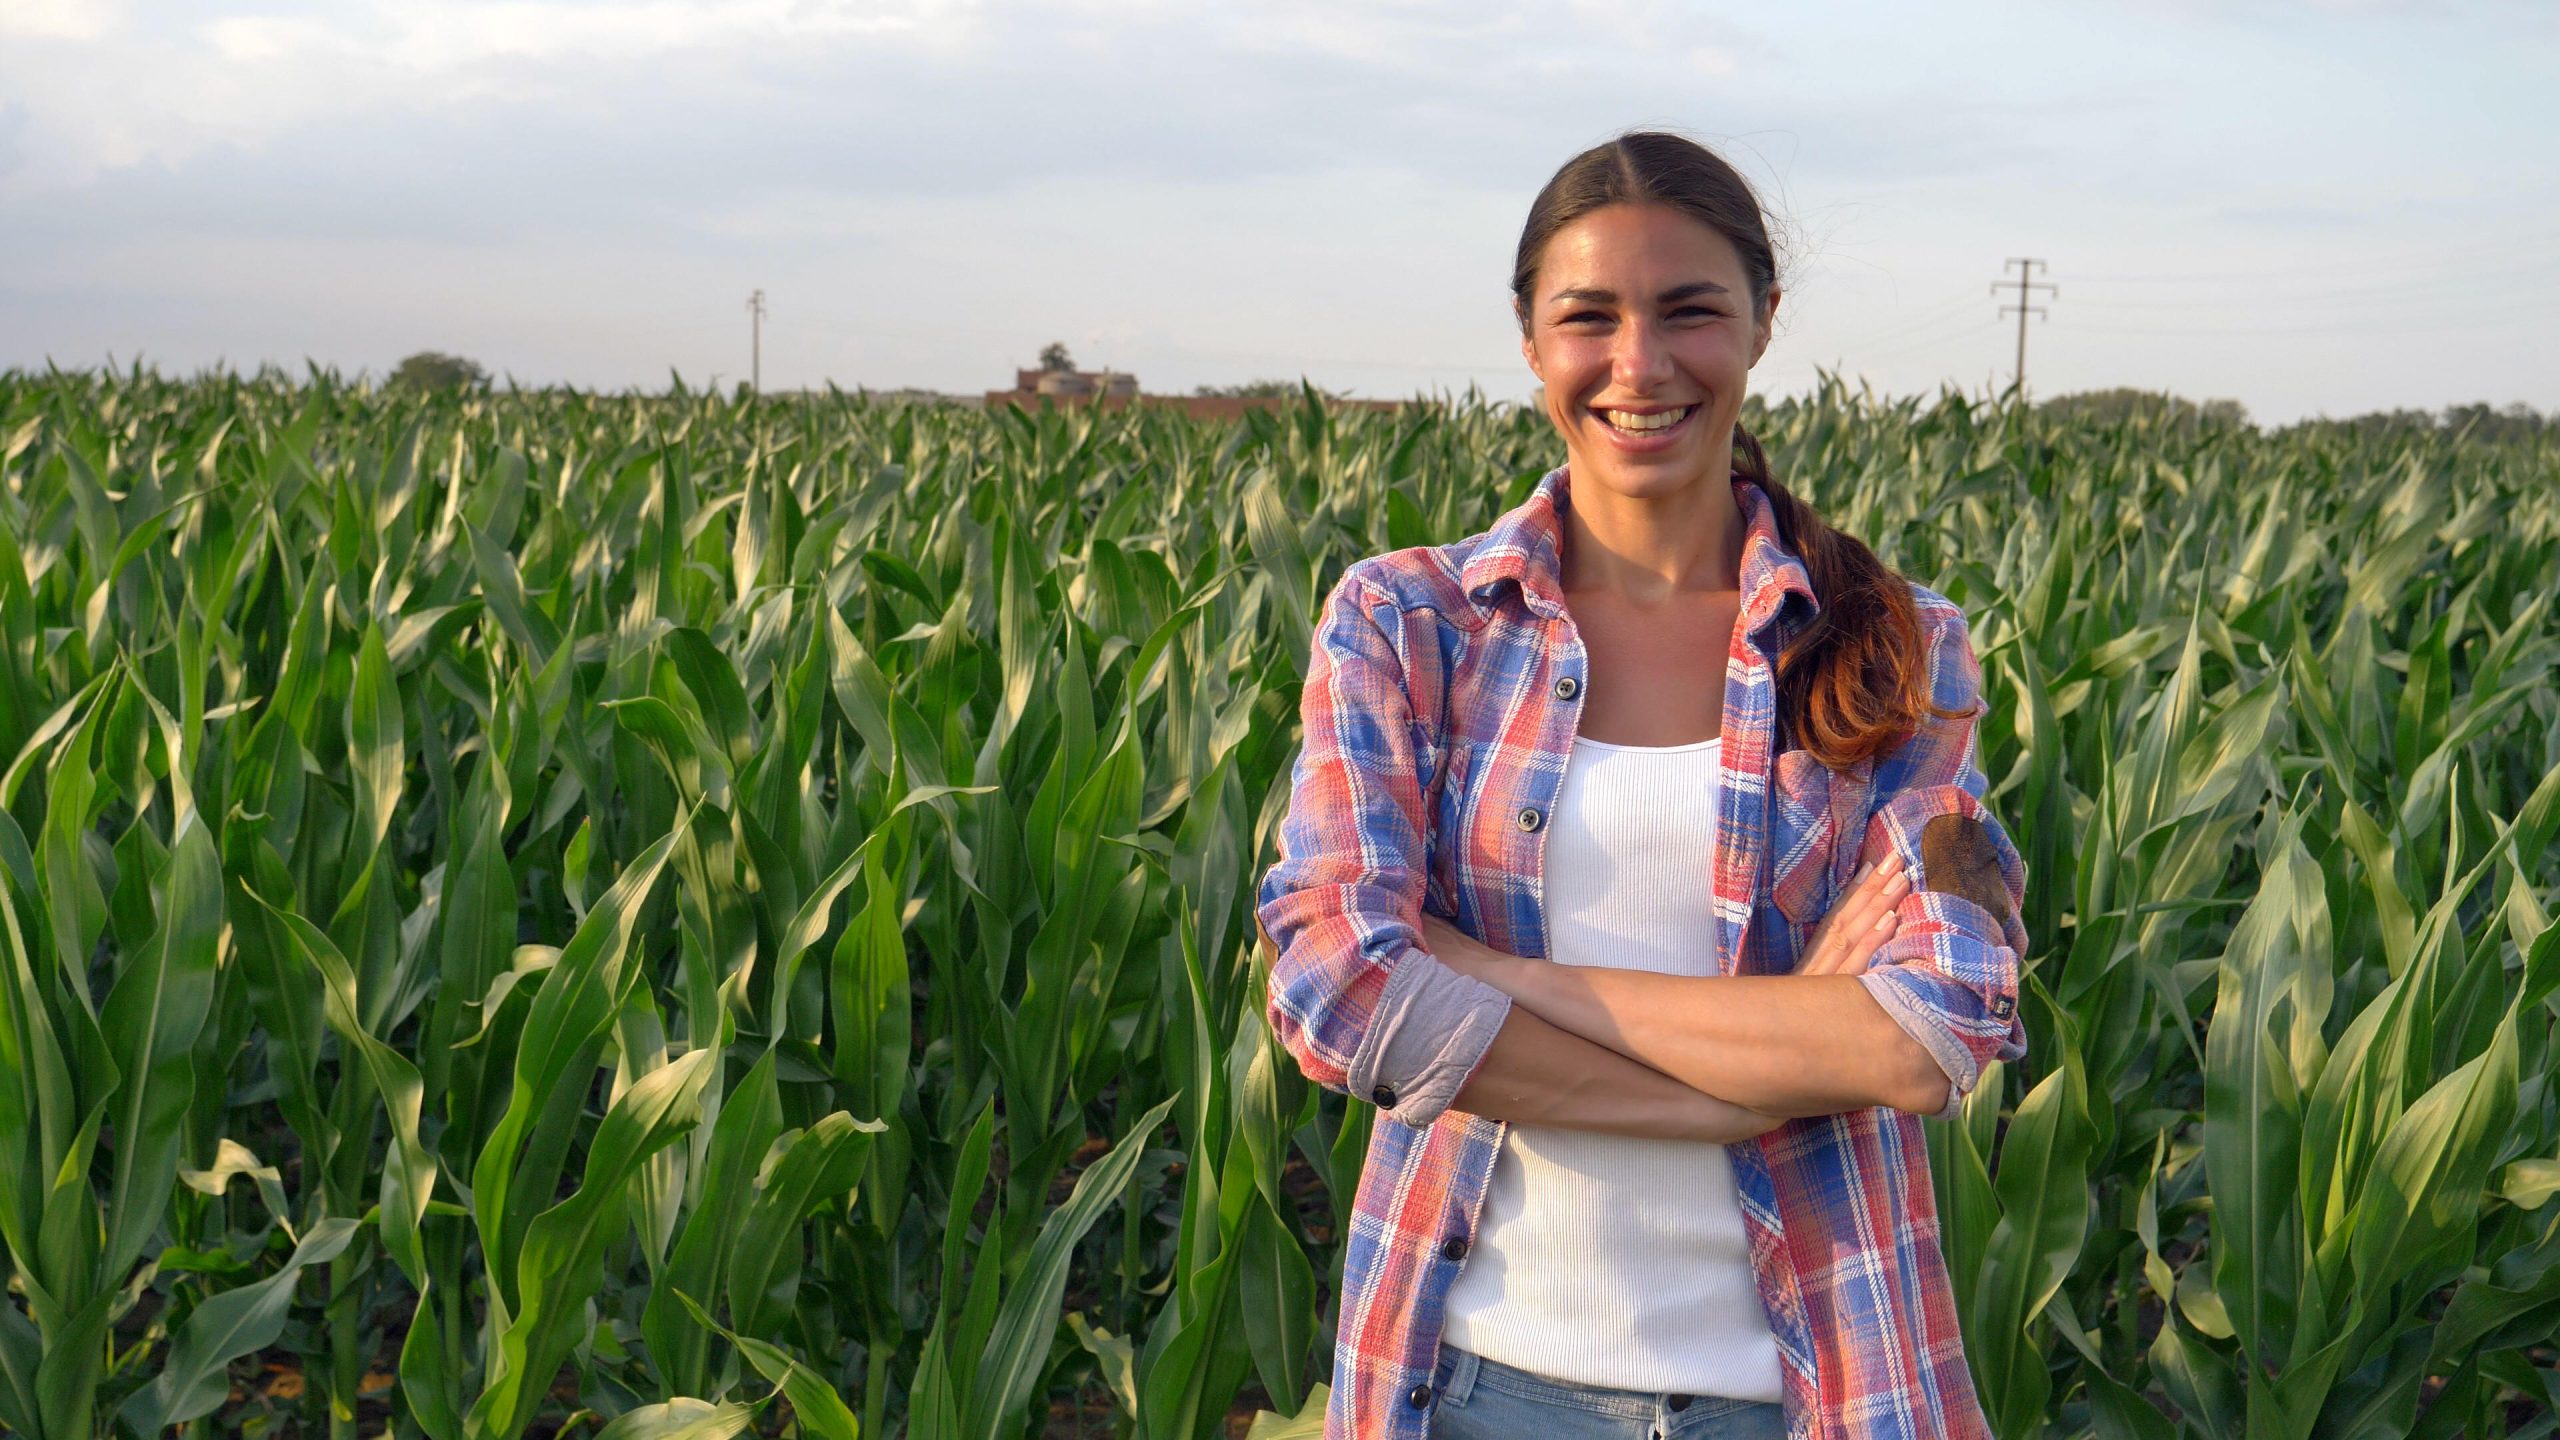 Rural kiwis swipe right for country love on new farmer dating app